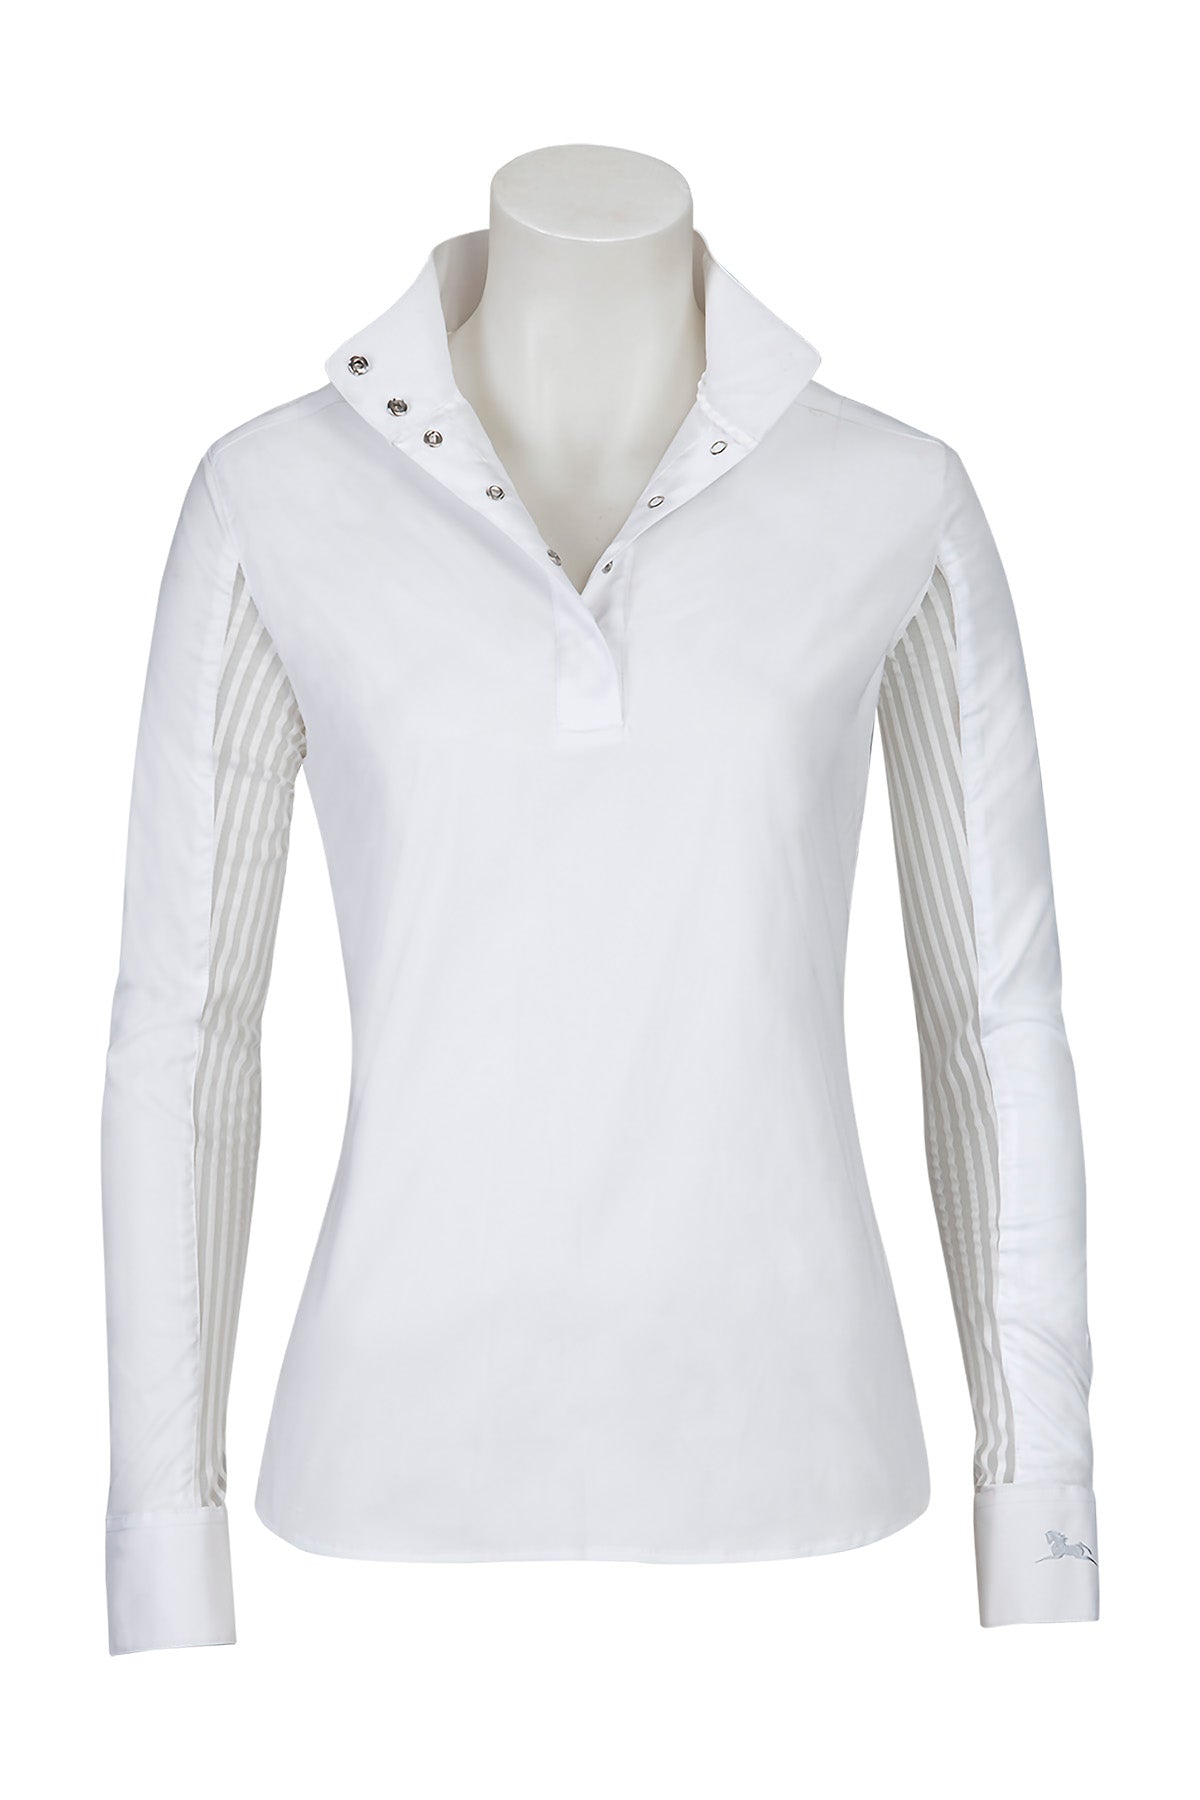 RJ Classics Lauren Ladies&#39; Show Shirt White Stripe-Show Shirts - Ladies Show Shirt-RJ Classics-White Stripe-L-Manhattan Saddlery